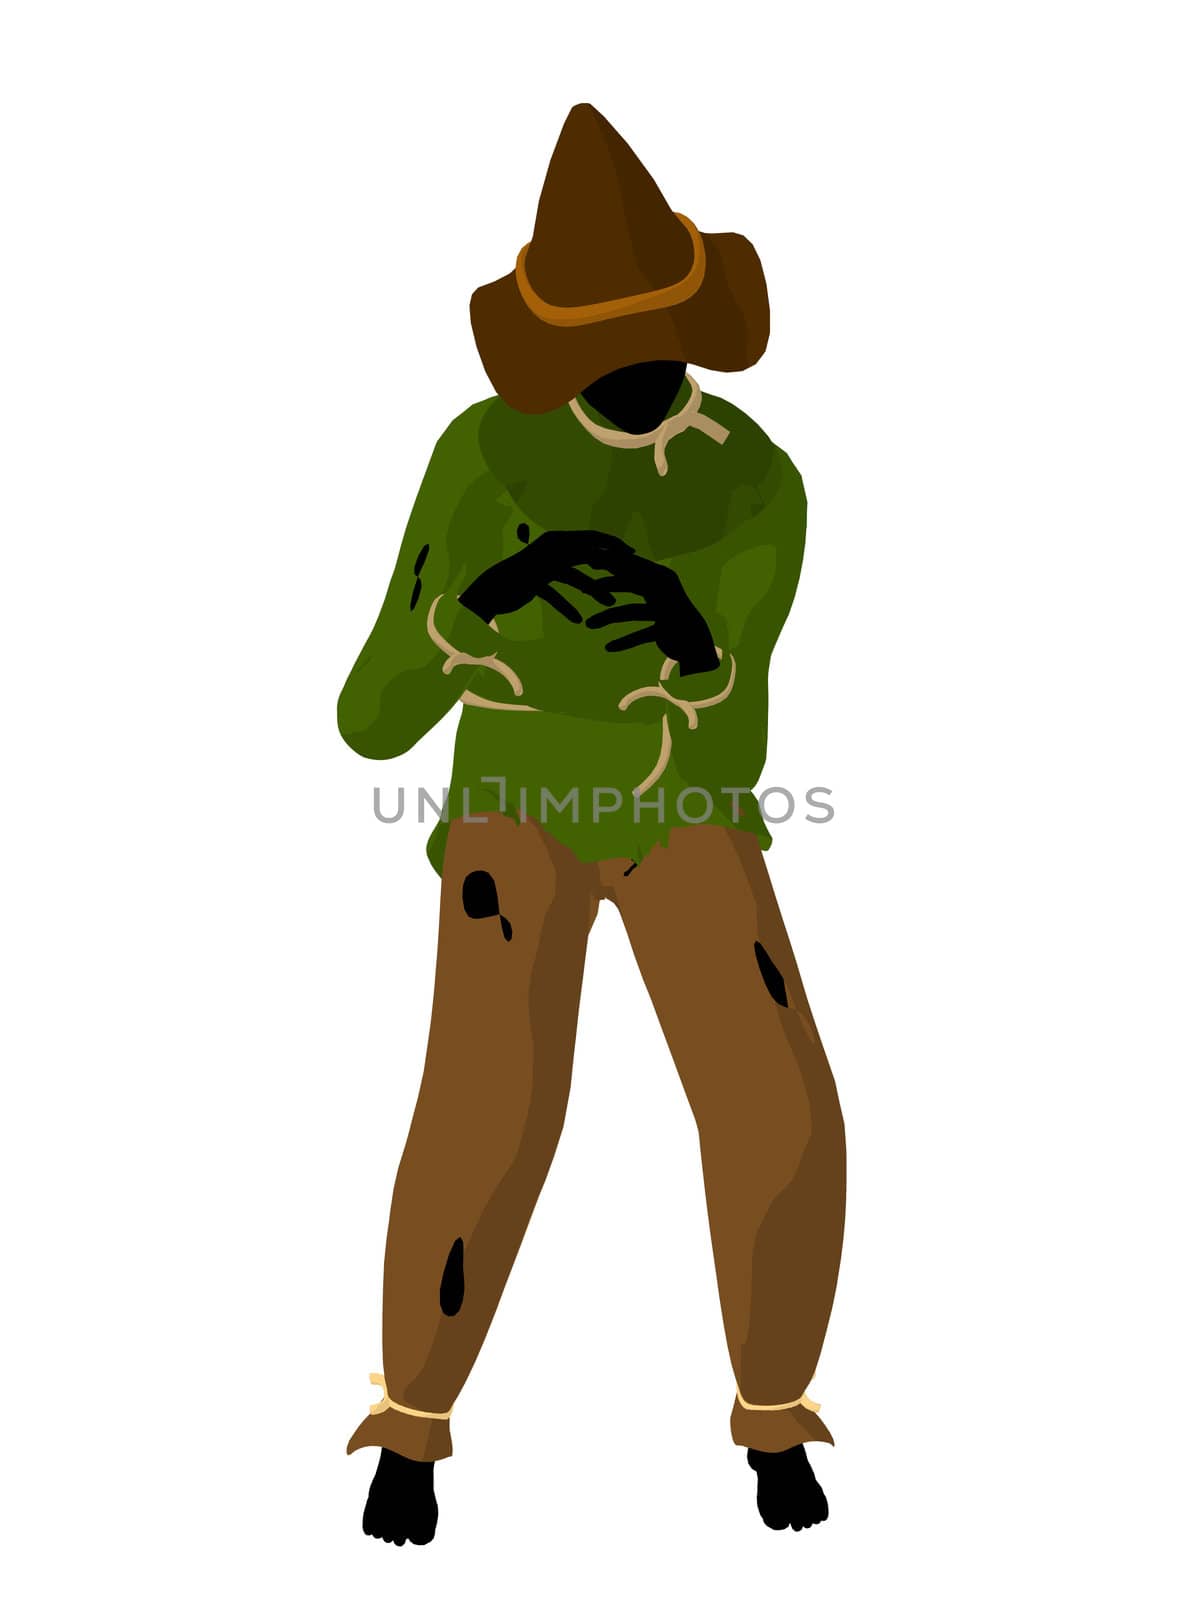 Halloween scarecrow silhouette illustration on a white background